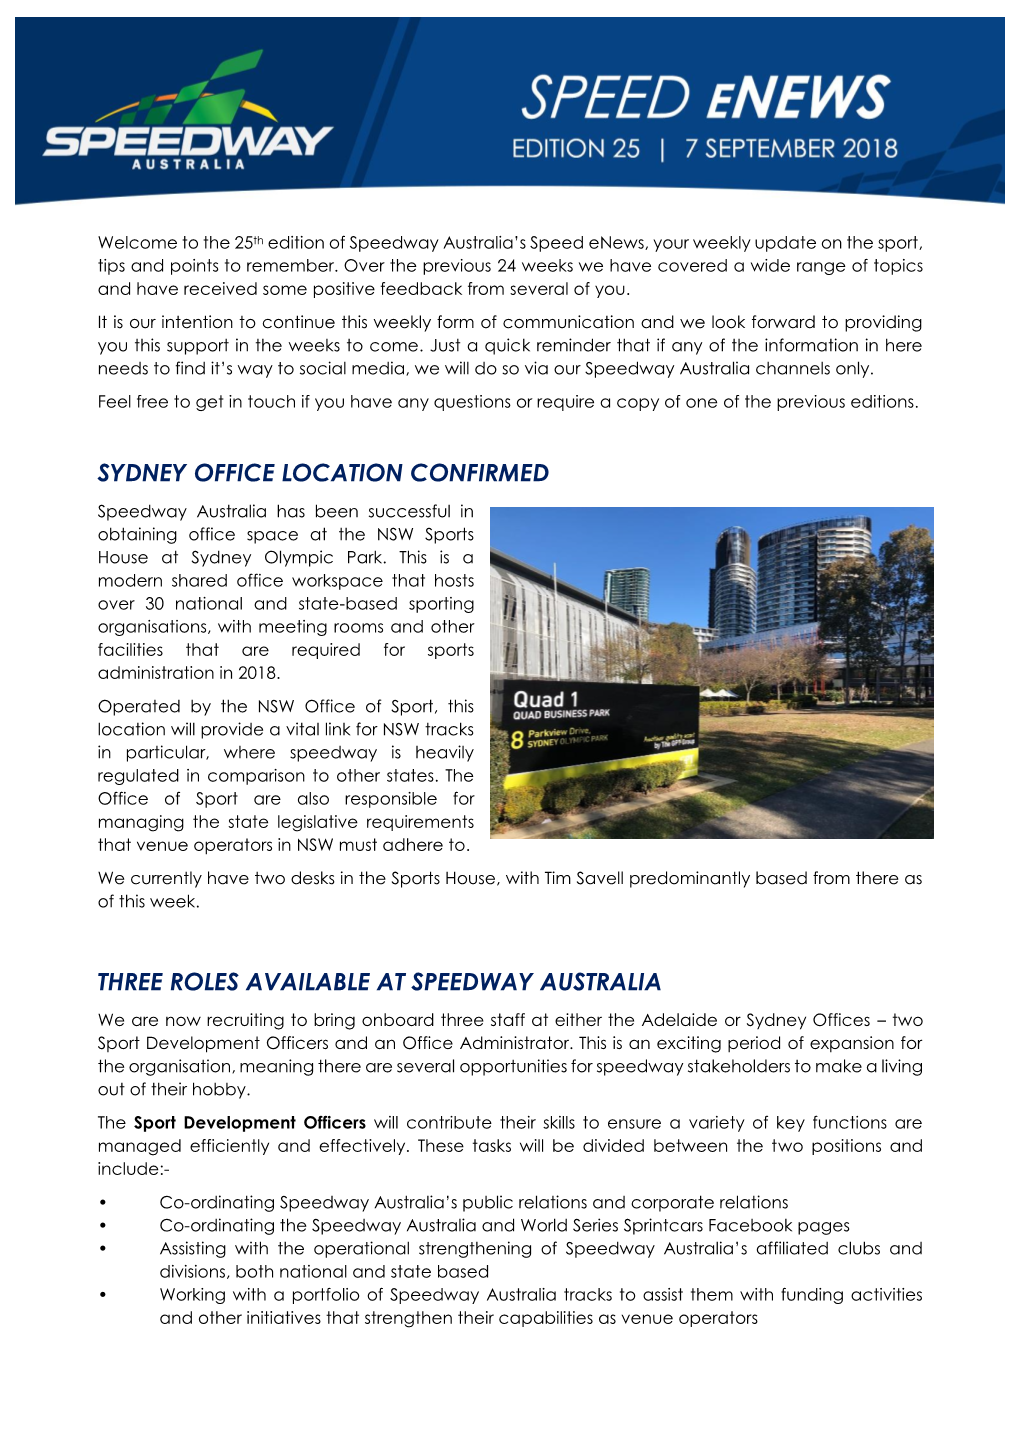 Sydney Office Location Confirmed Three Roles